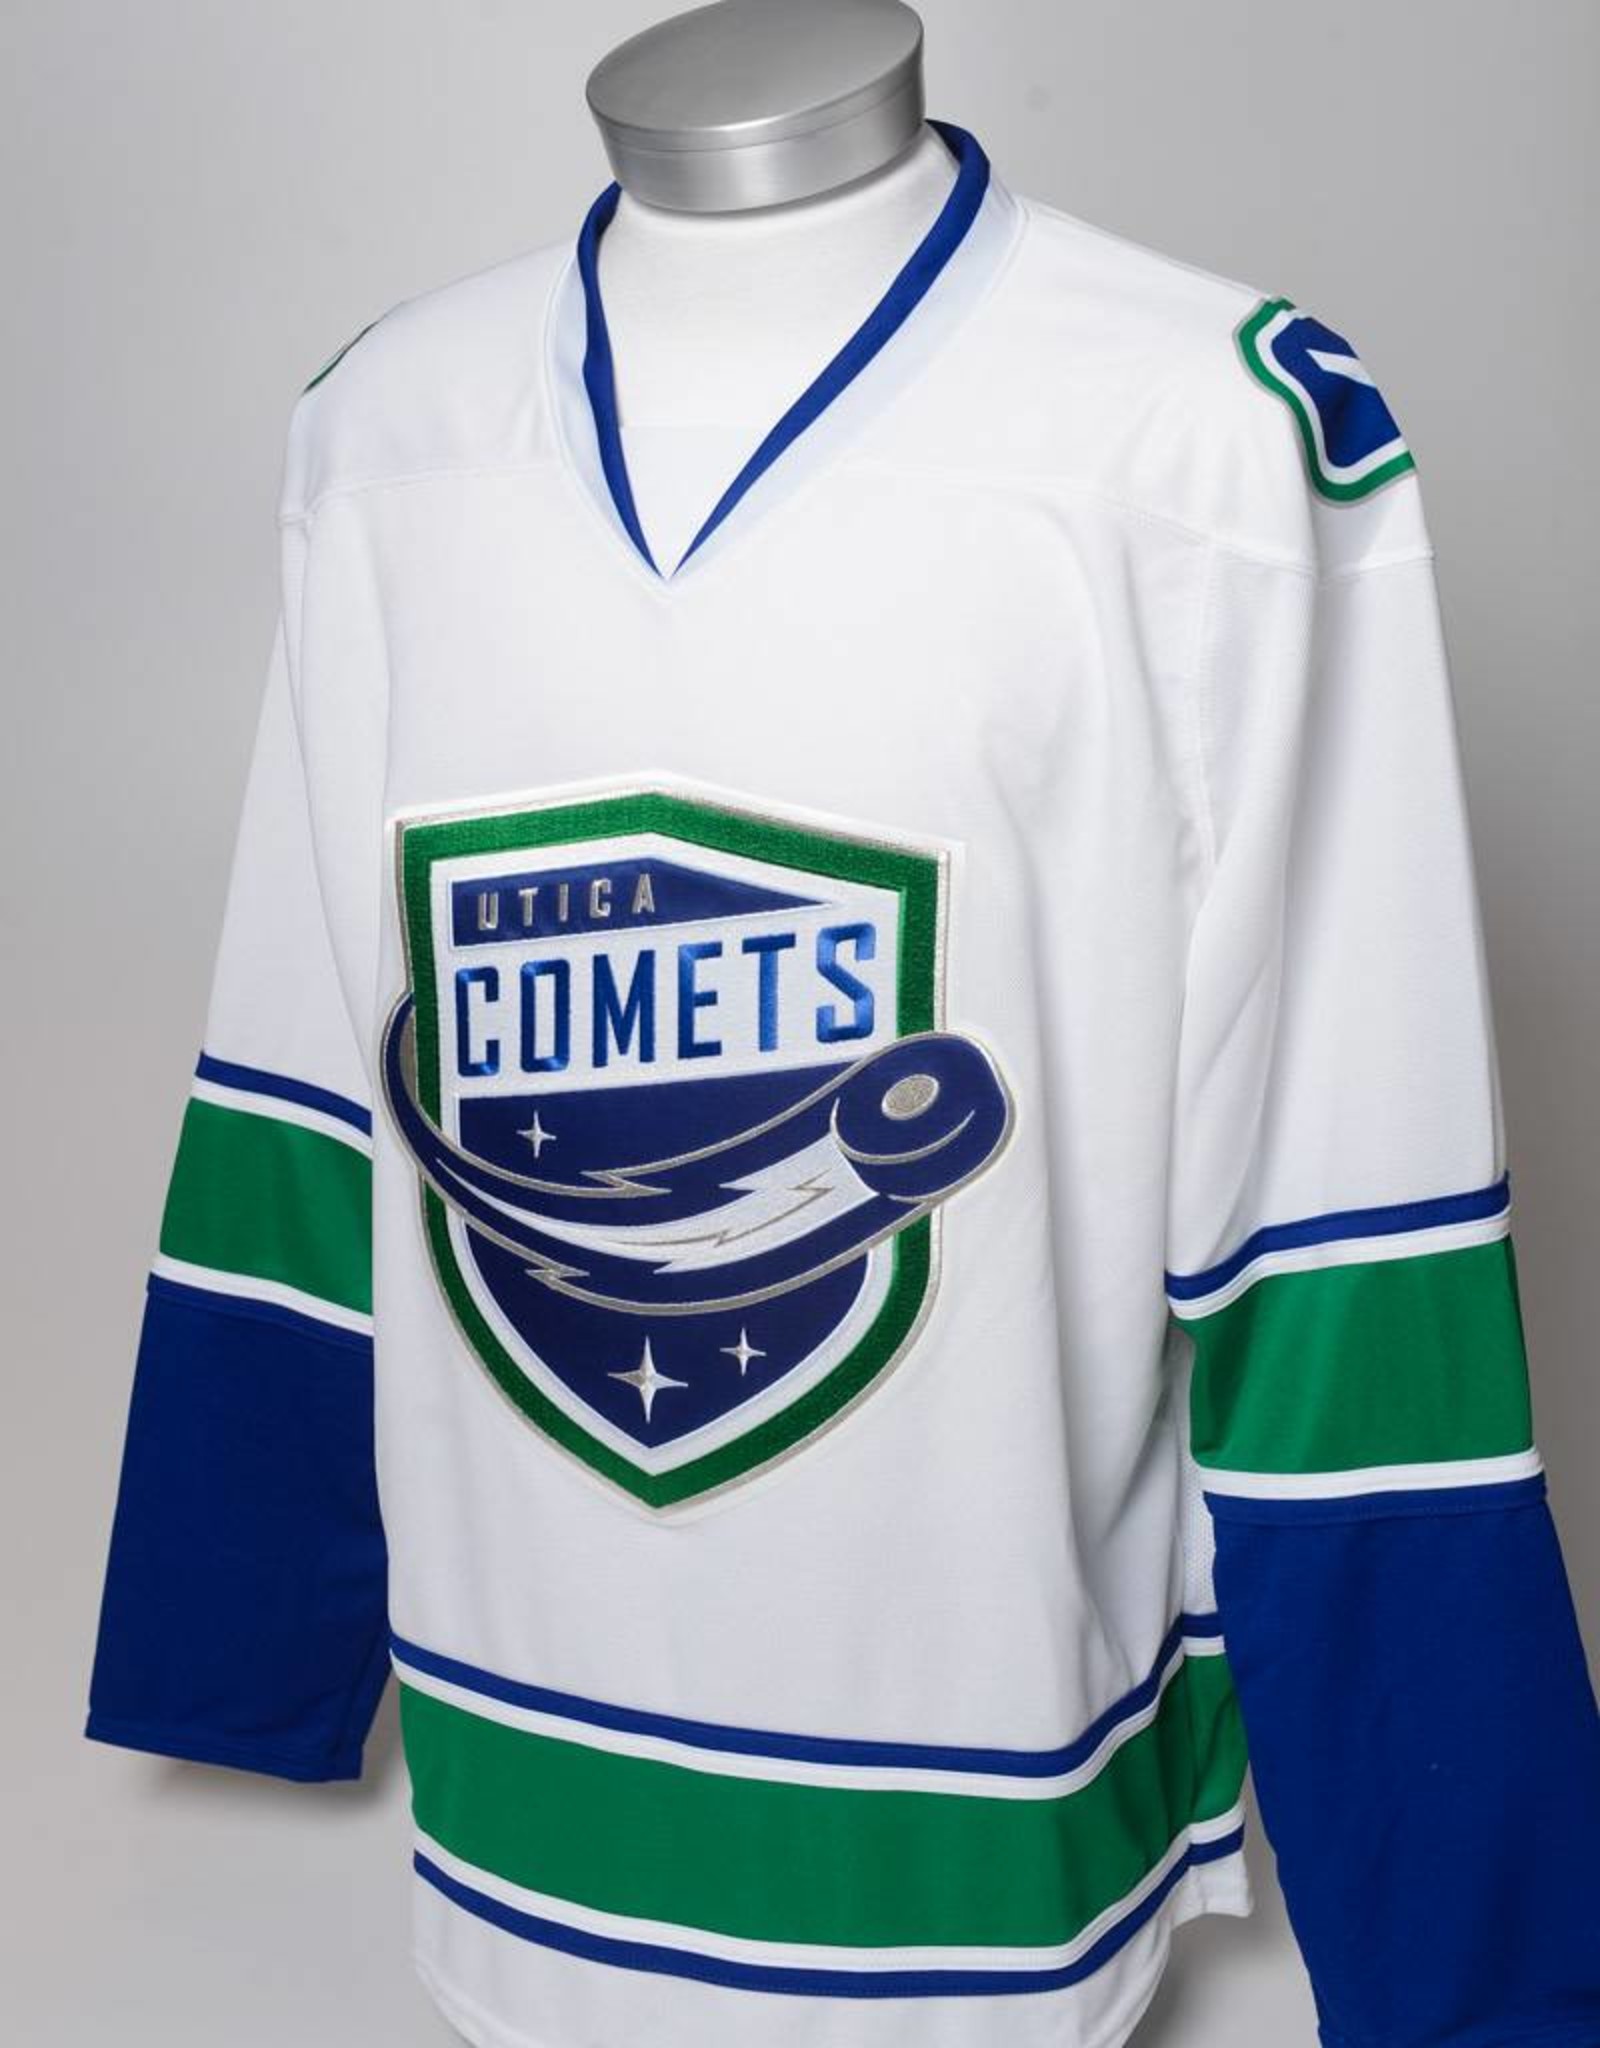 utica comets jersey for sale